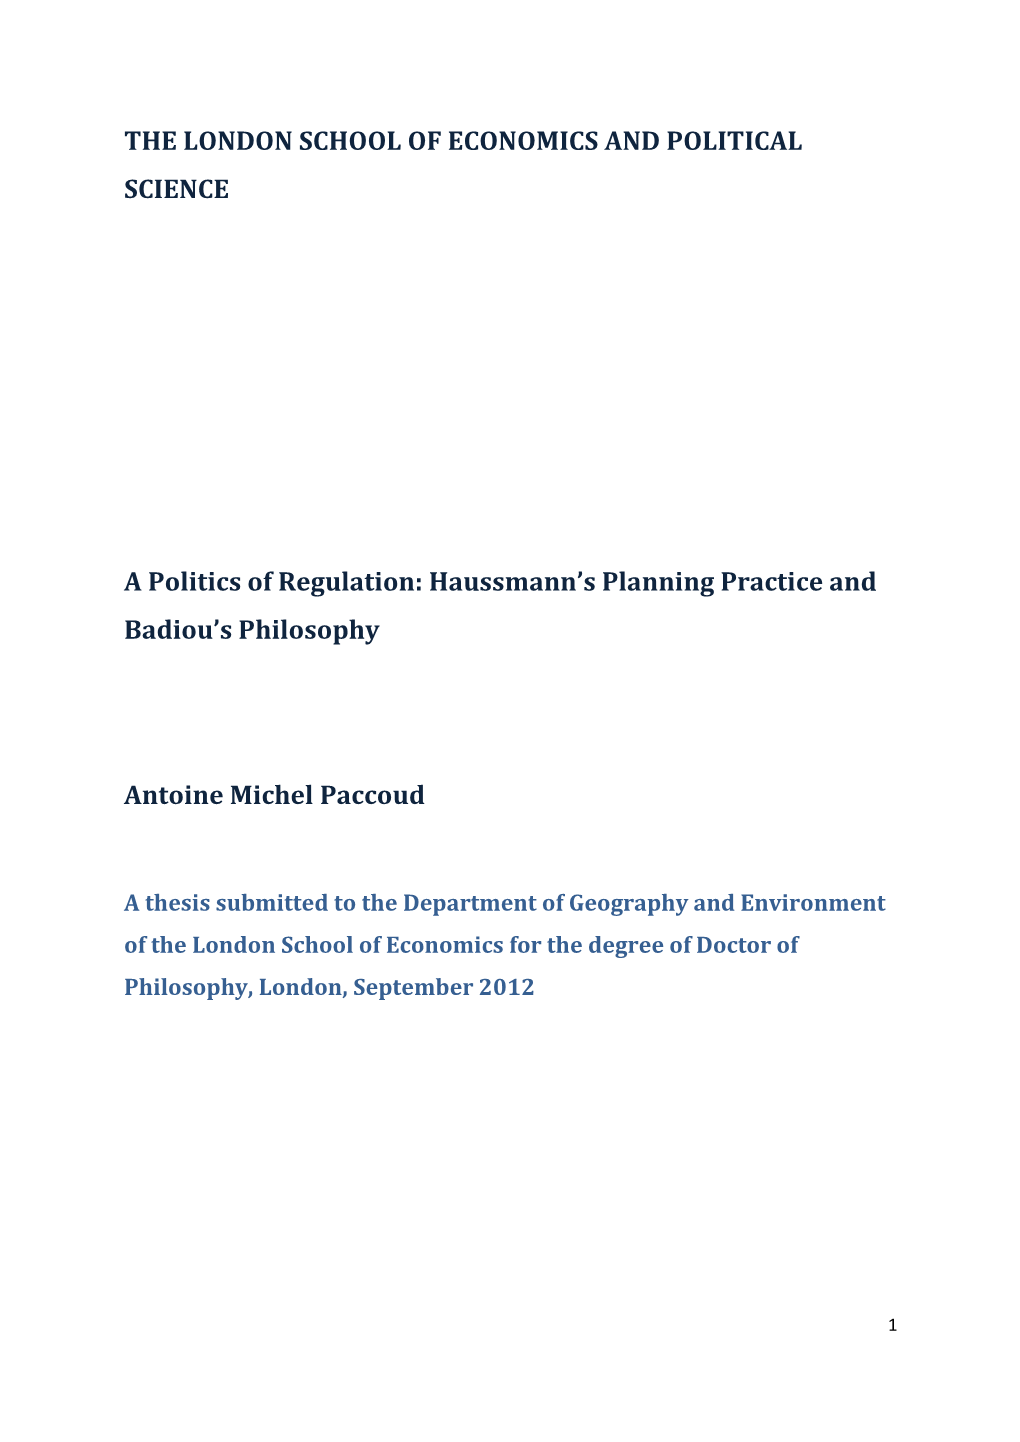 A Politics of Regulation: Haussmann’S Planning Practice and Badiou’S Philosophy